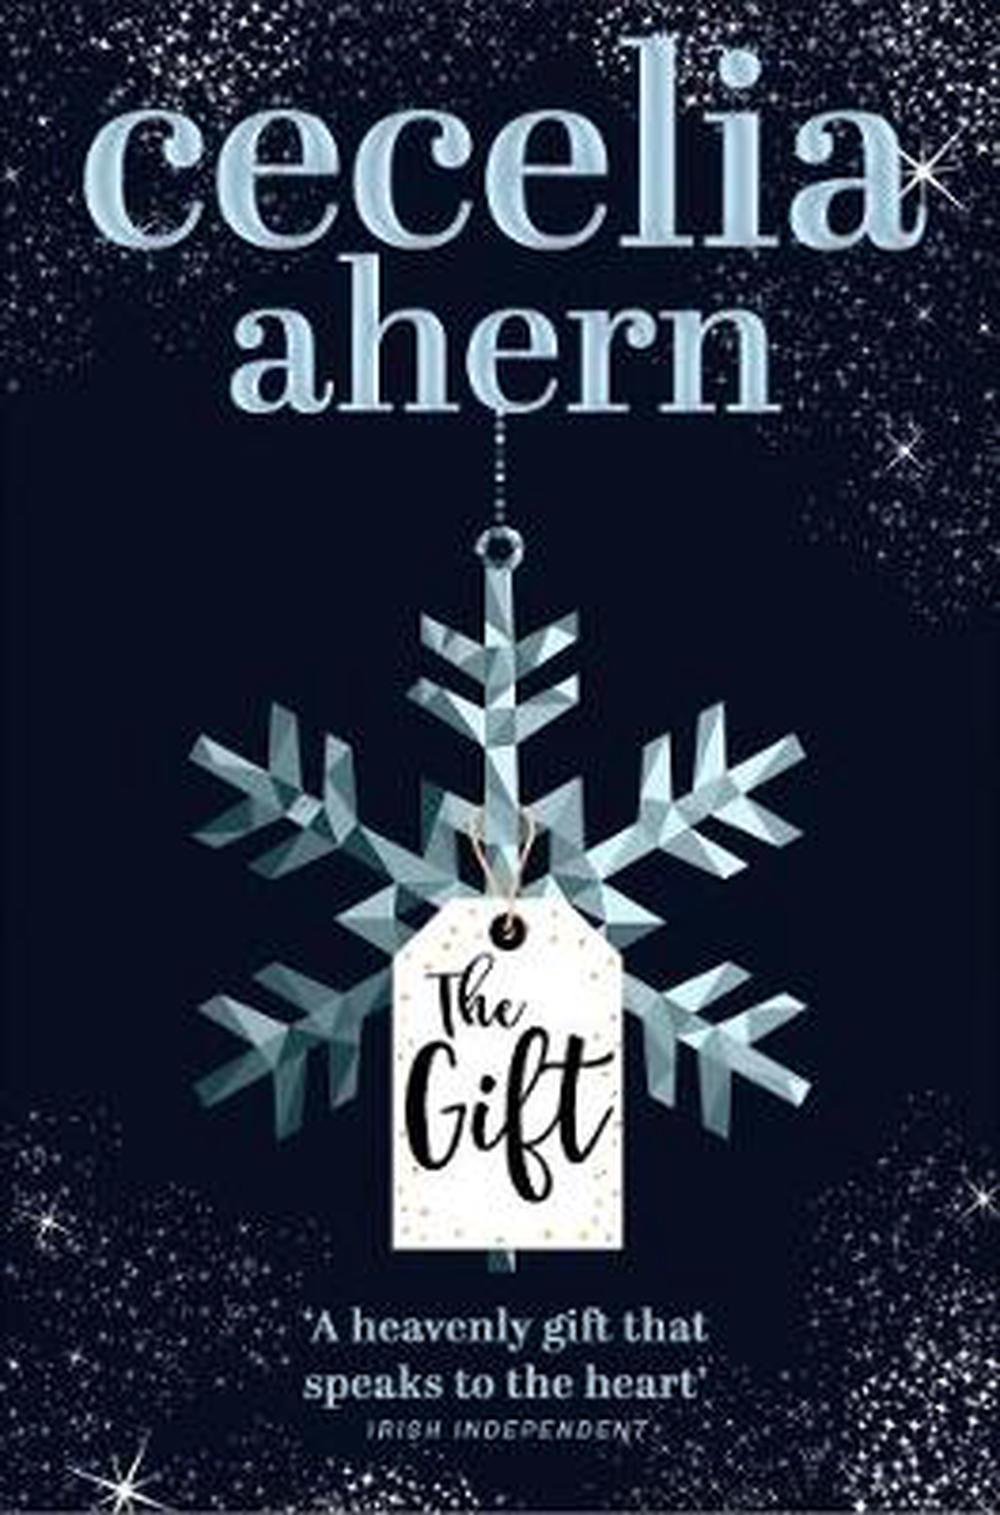 the gift cecelia ahern summary